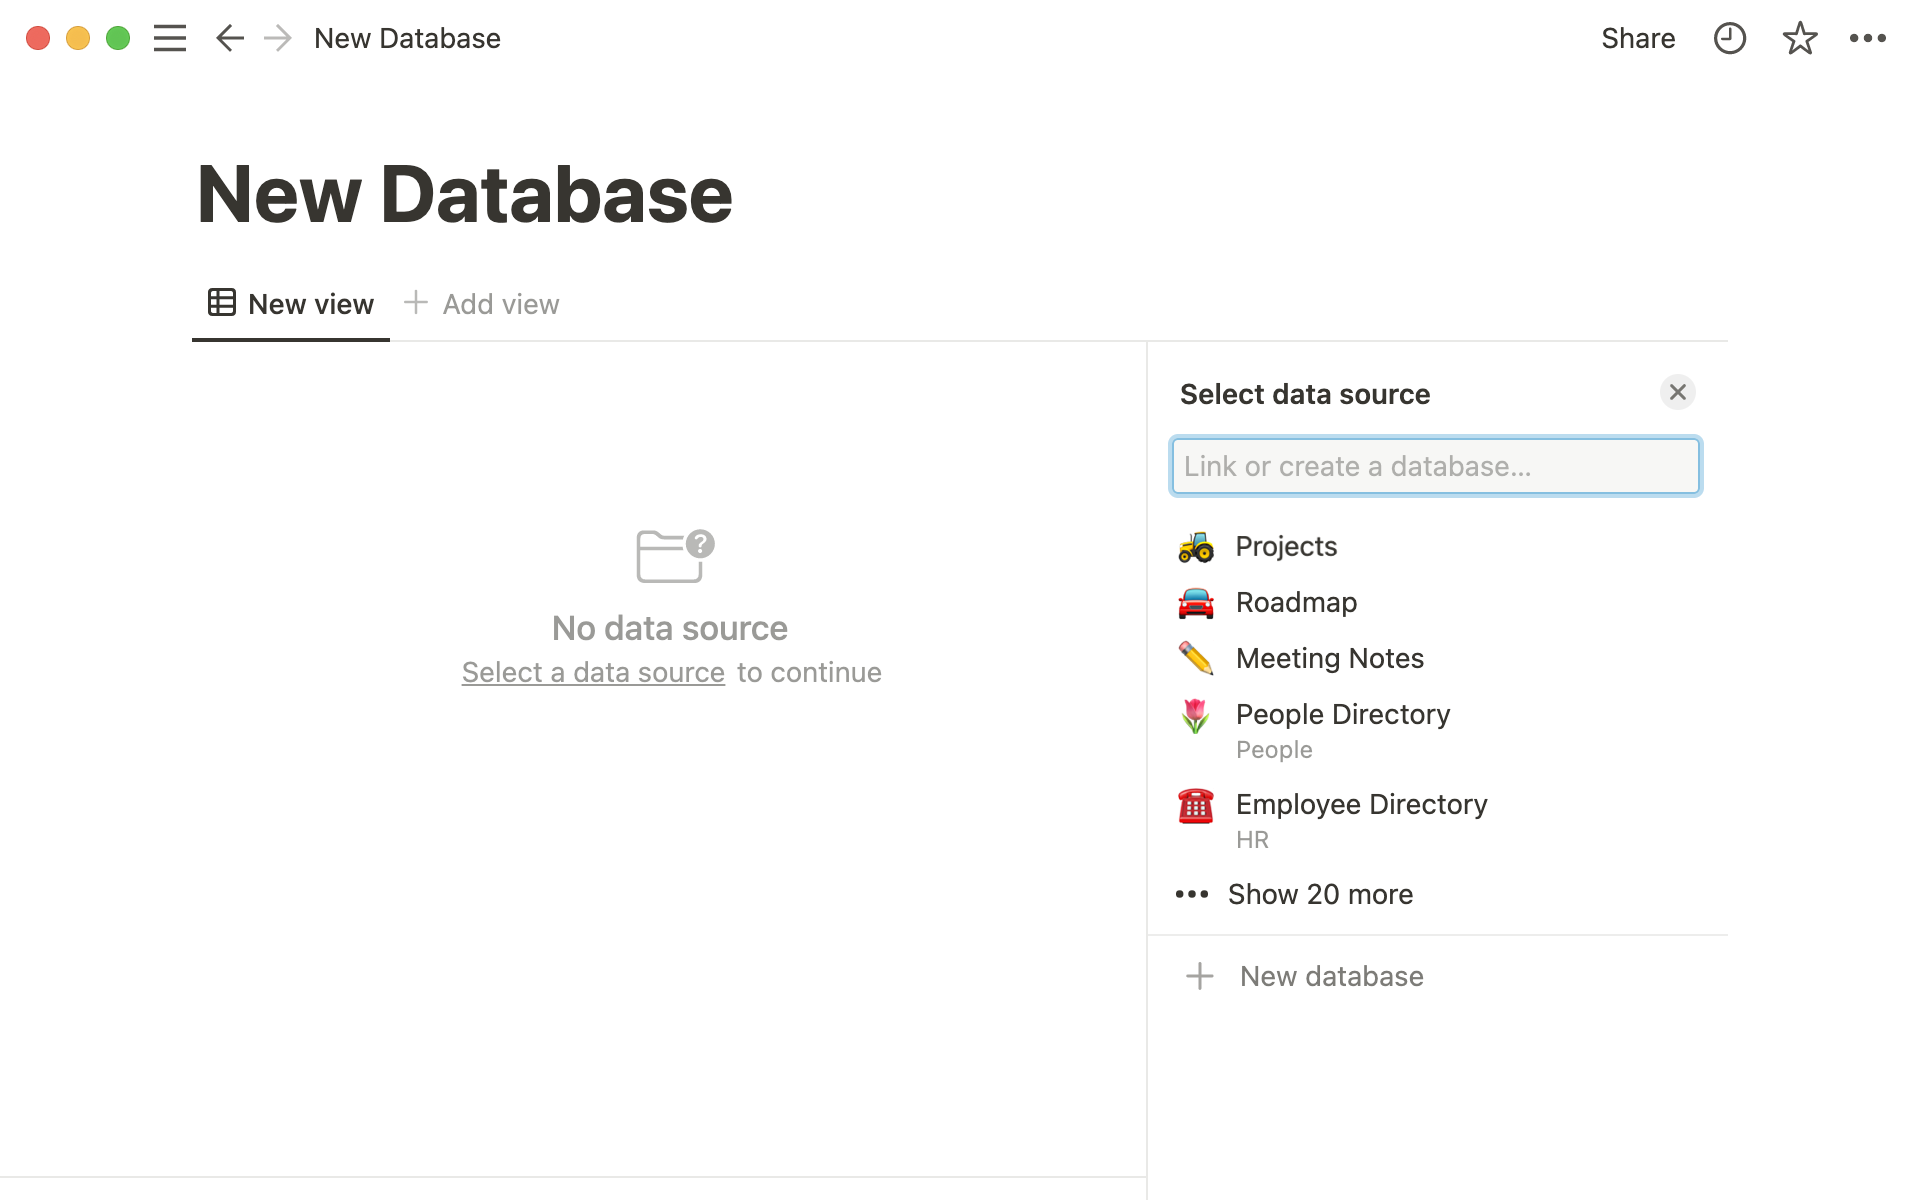 Create new database